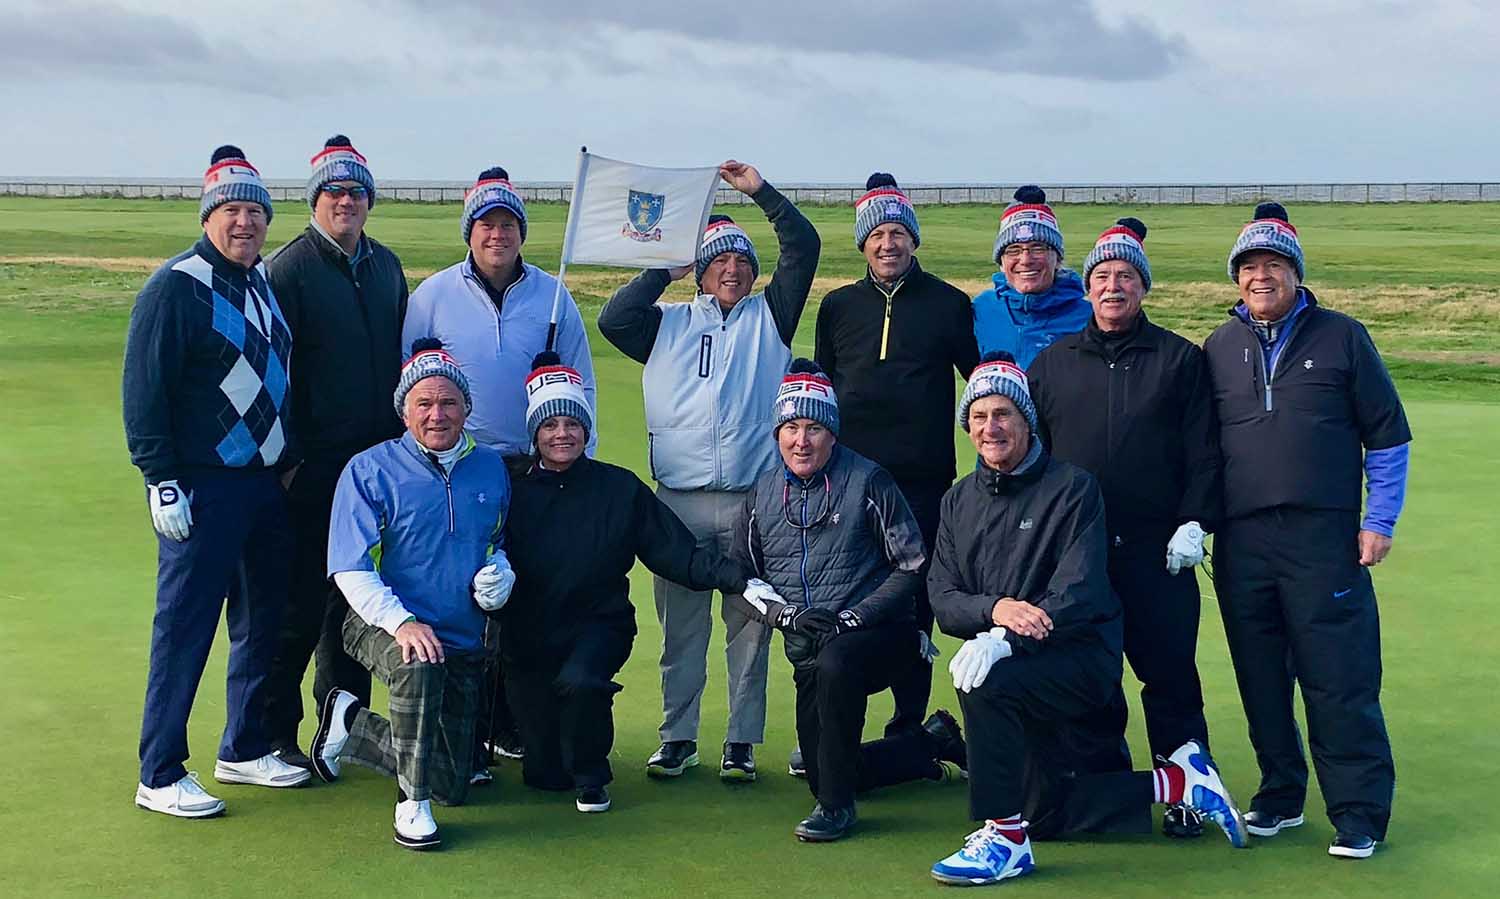 Golfers in Scotland - Planning your own Scotland golf trip